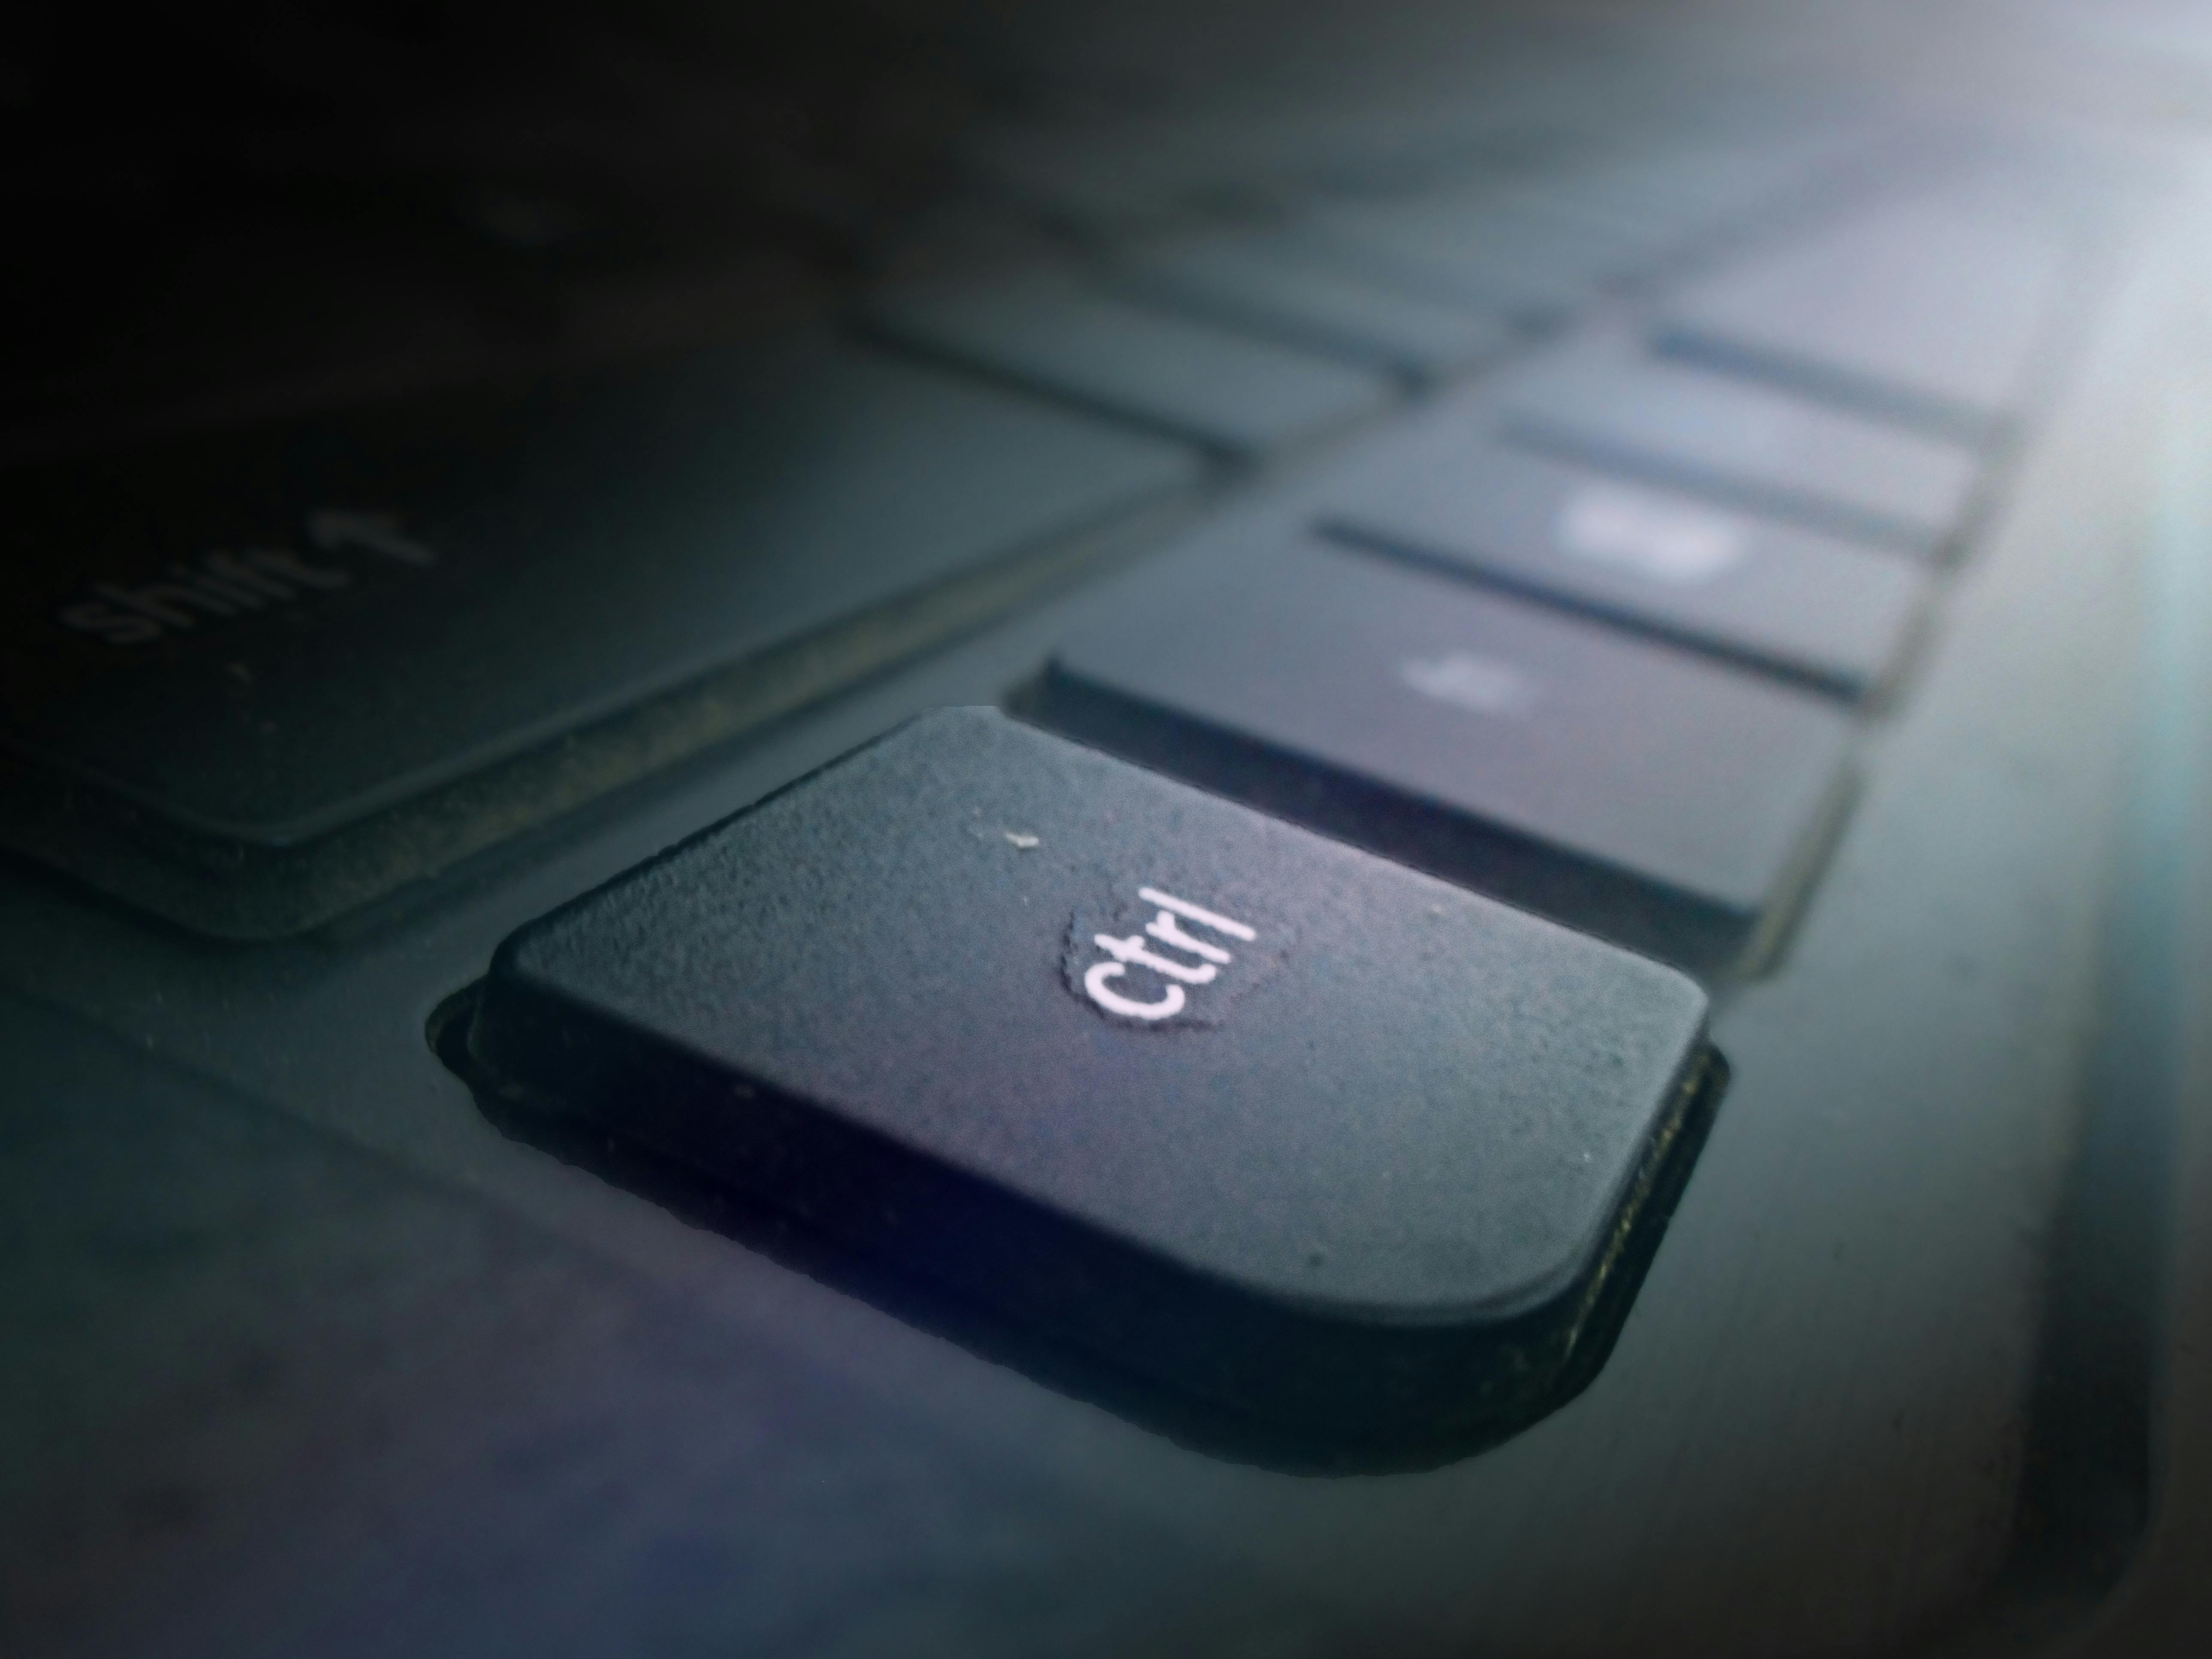 Free stock photo of Close-up shot of a computer keyboard